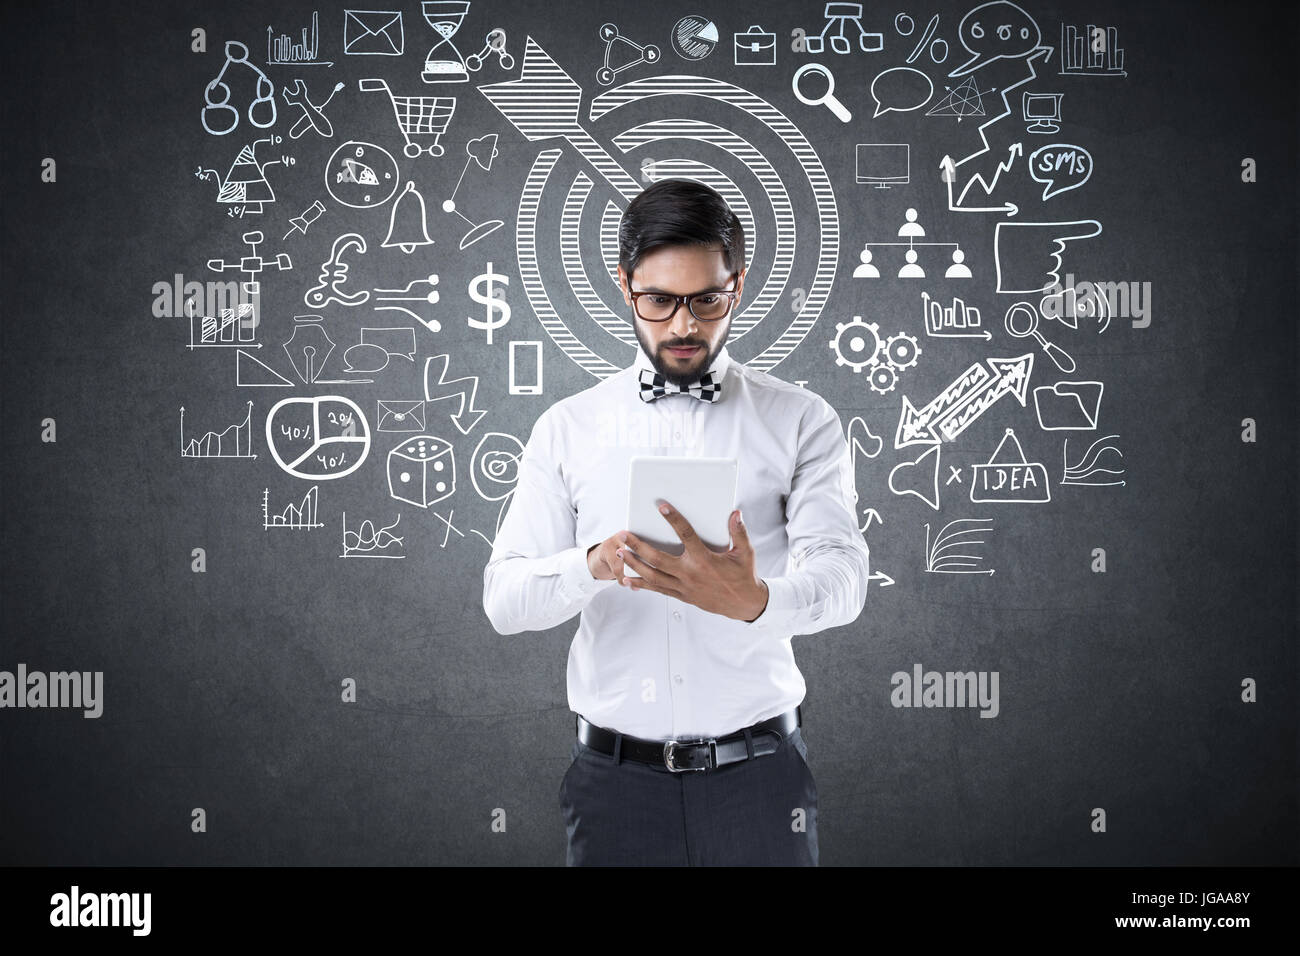 Businessman using digital tablet in front of blackboard avec icônes d'affaires et de technologie Banque D'Images